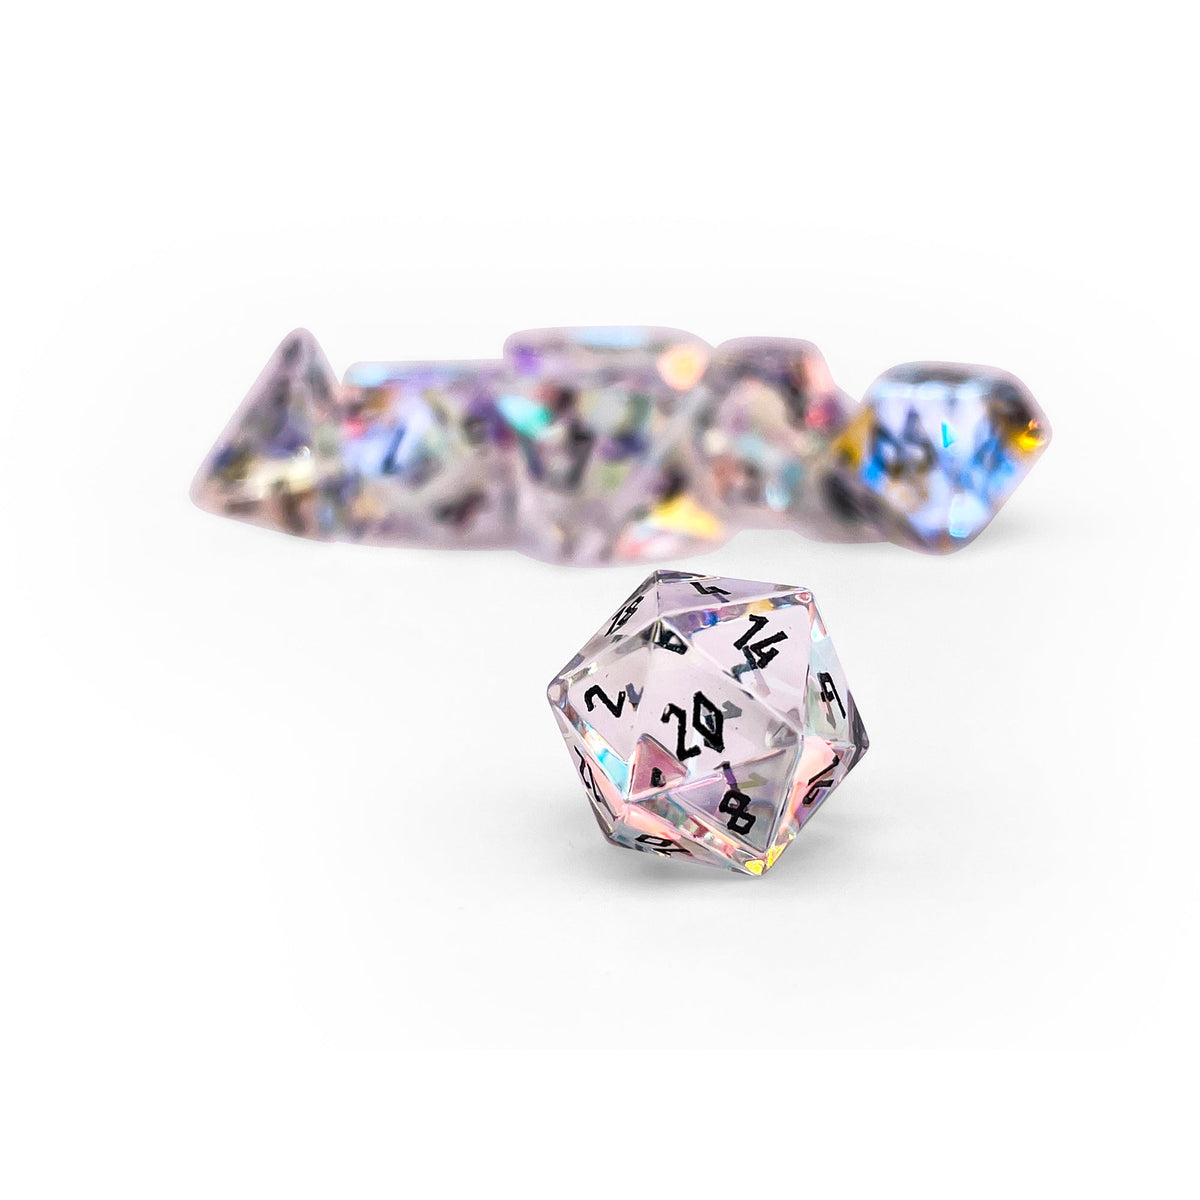 K9 Rainbow Glass - Pebble RPG Set Glass Dice - NOR 01541